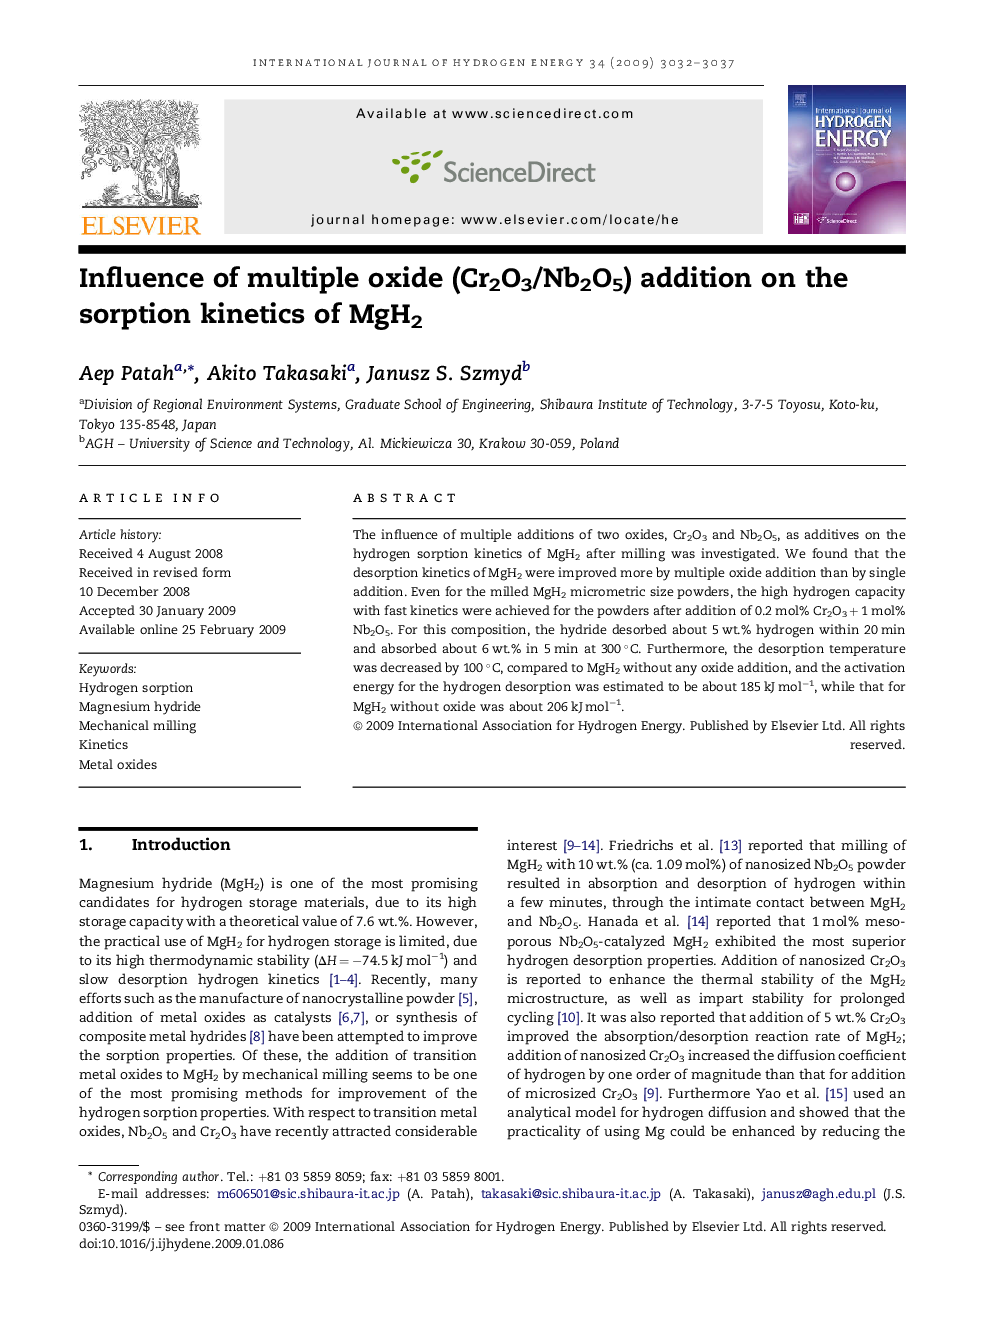 Influence of multiple oxide (Cr2O3/Nb2O5) addition on the sorption kinetics of MgH2